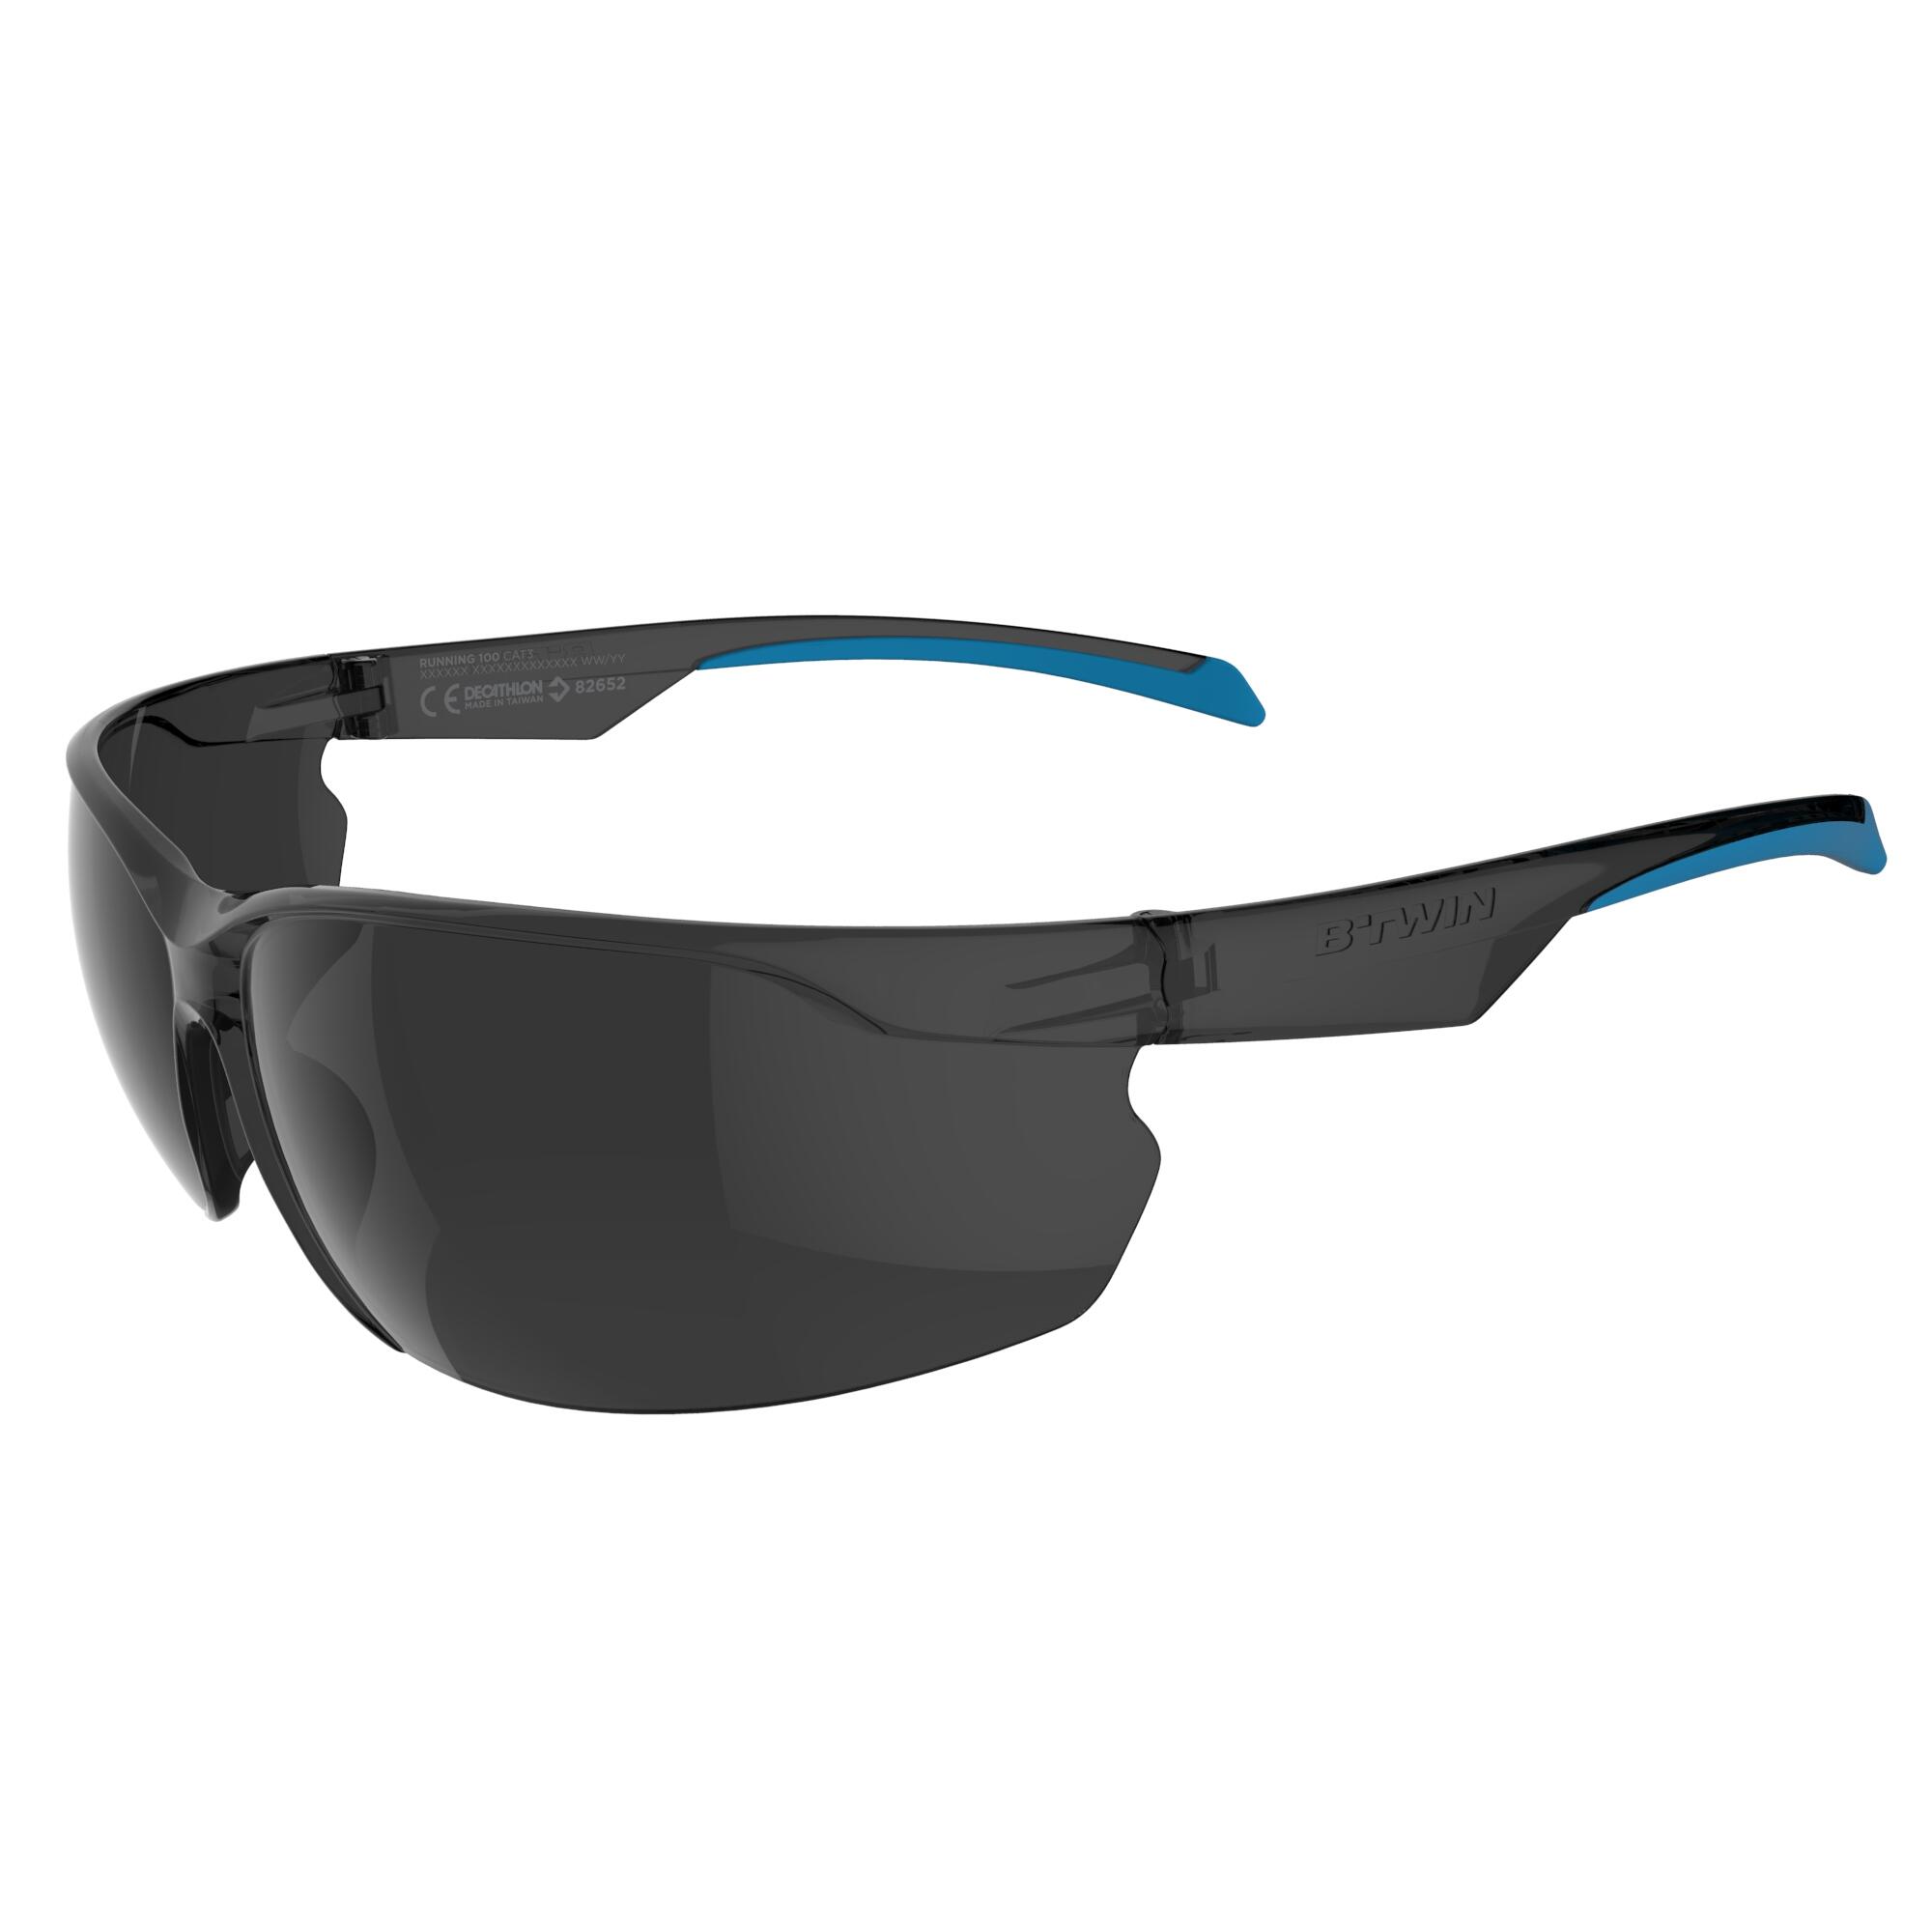 ROCKRIDER ST 100 Category 3 Adult Mountain Biking Sunglasses - Grey/Blue